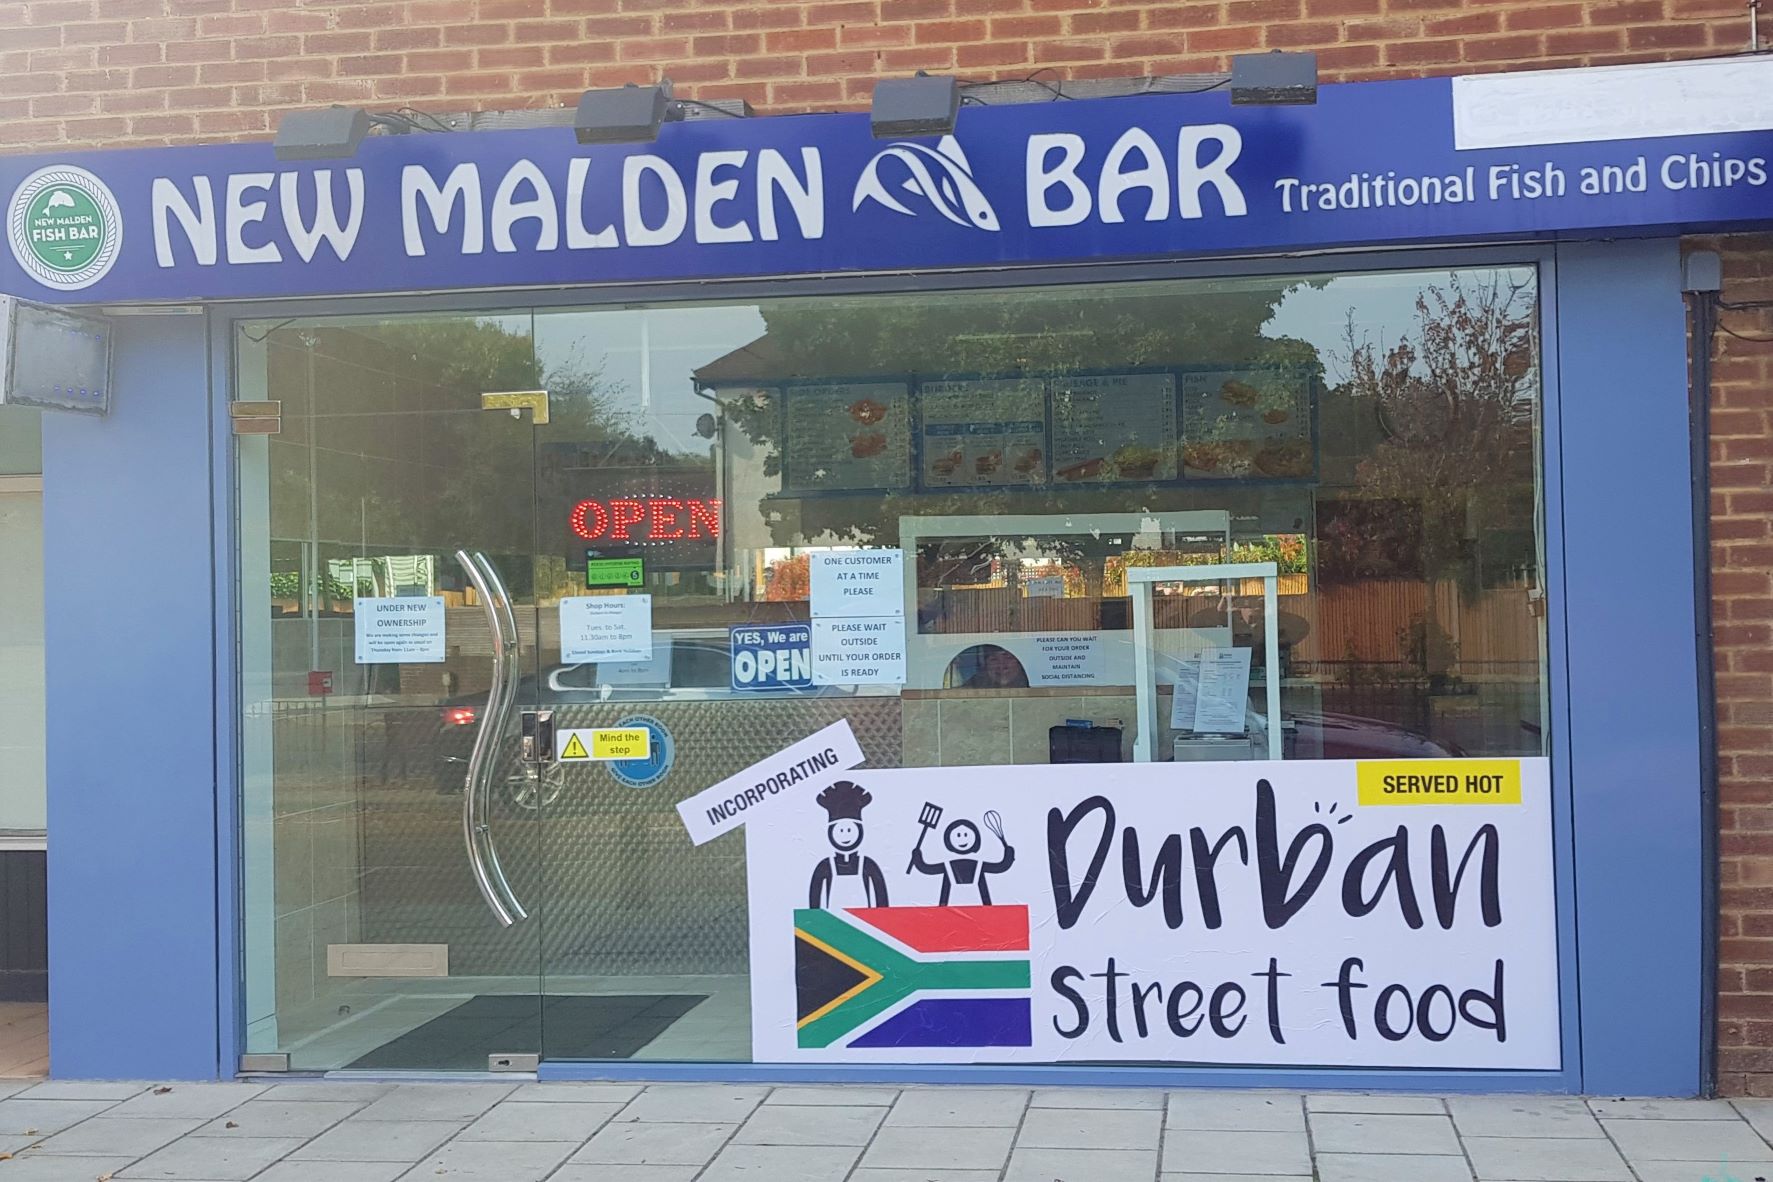 New Malden Fish Bar and Durban Street Food